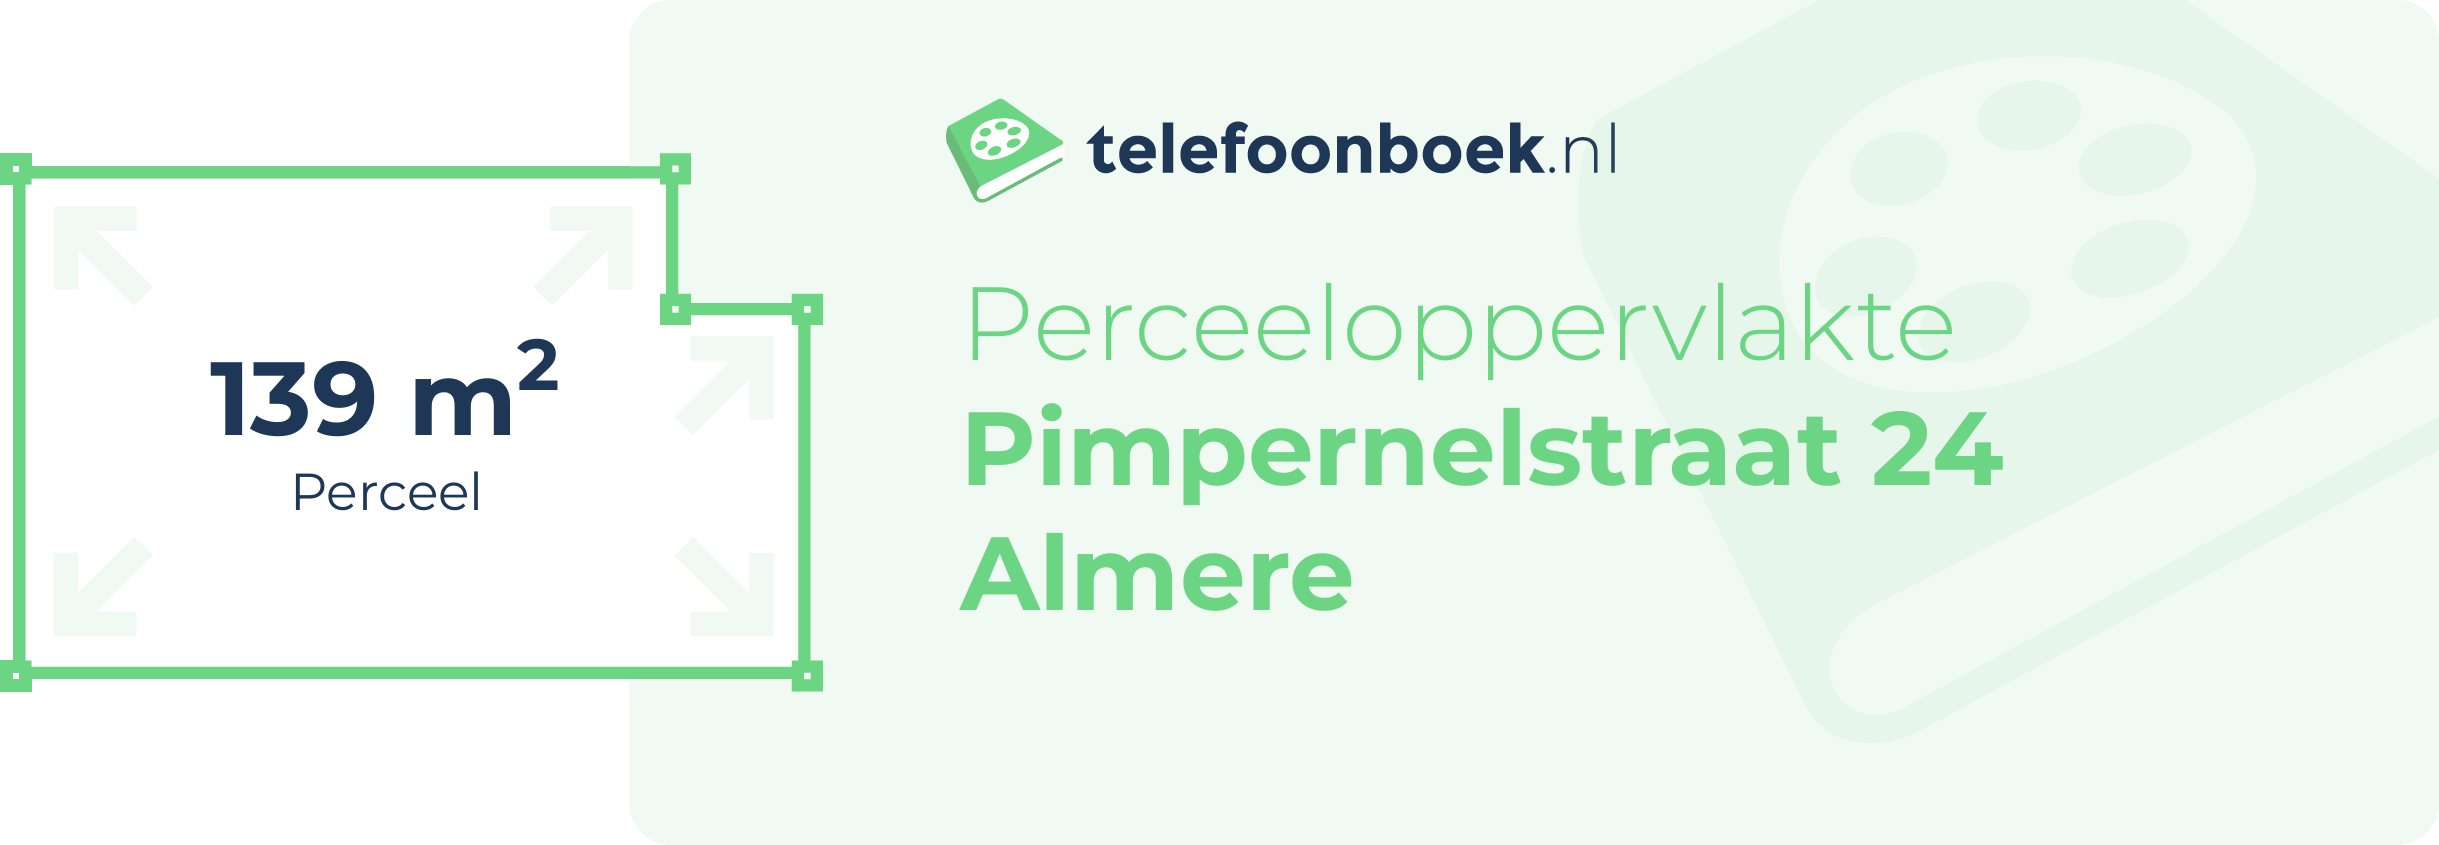 Perceeloppervlakte Pimpernelstraat 24 Almere